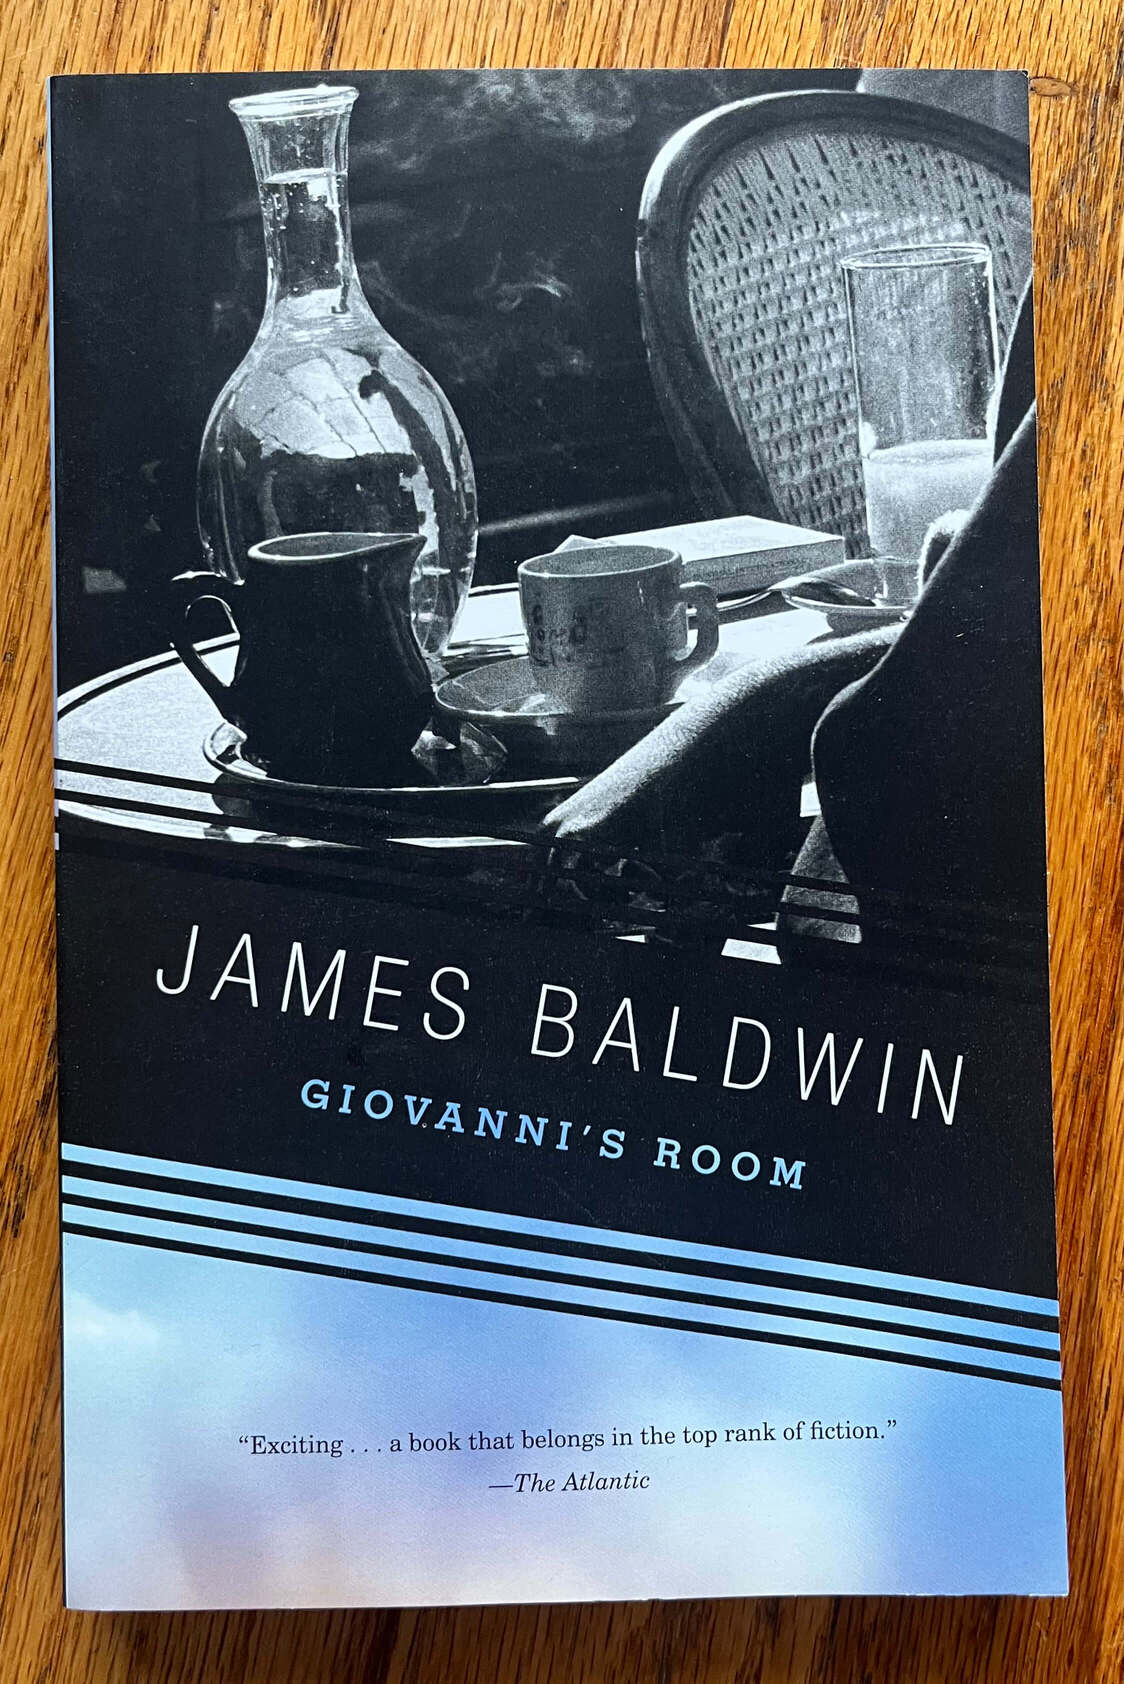 “Giovanni’s Room” by James Baldwin.